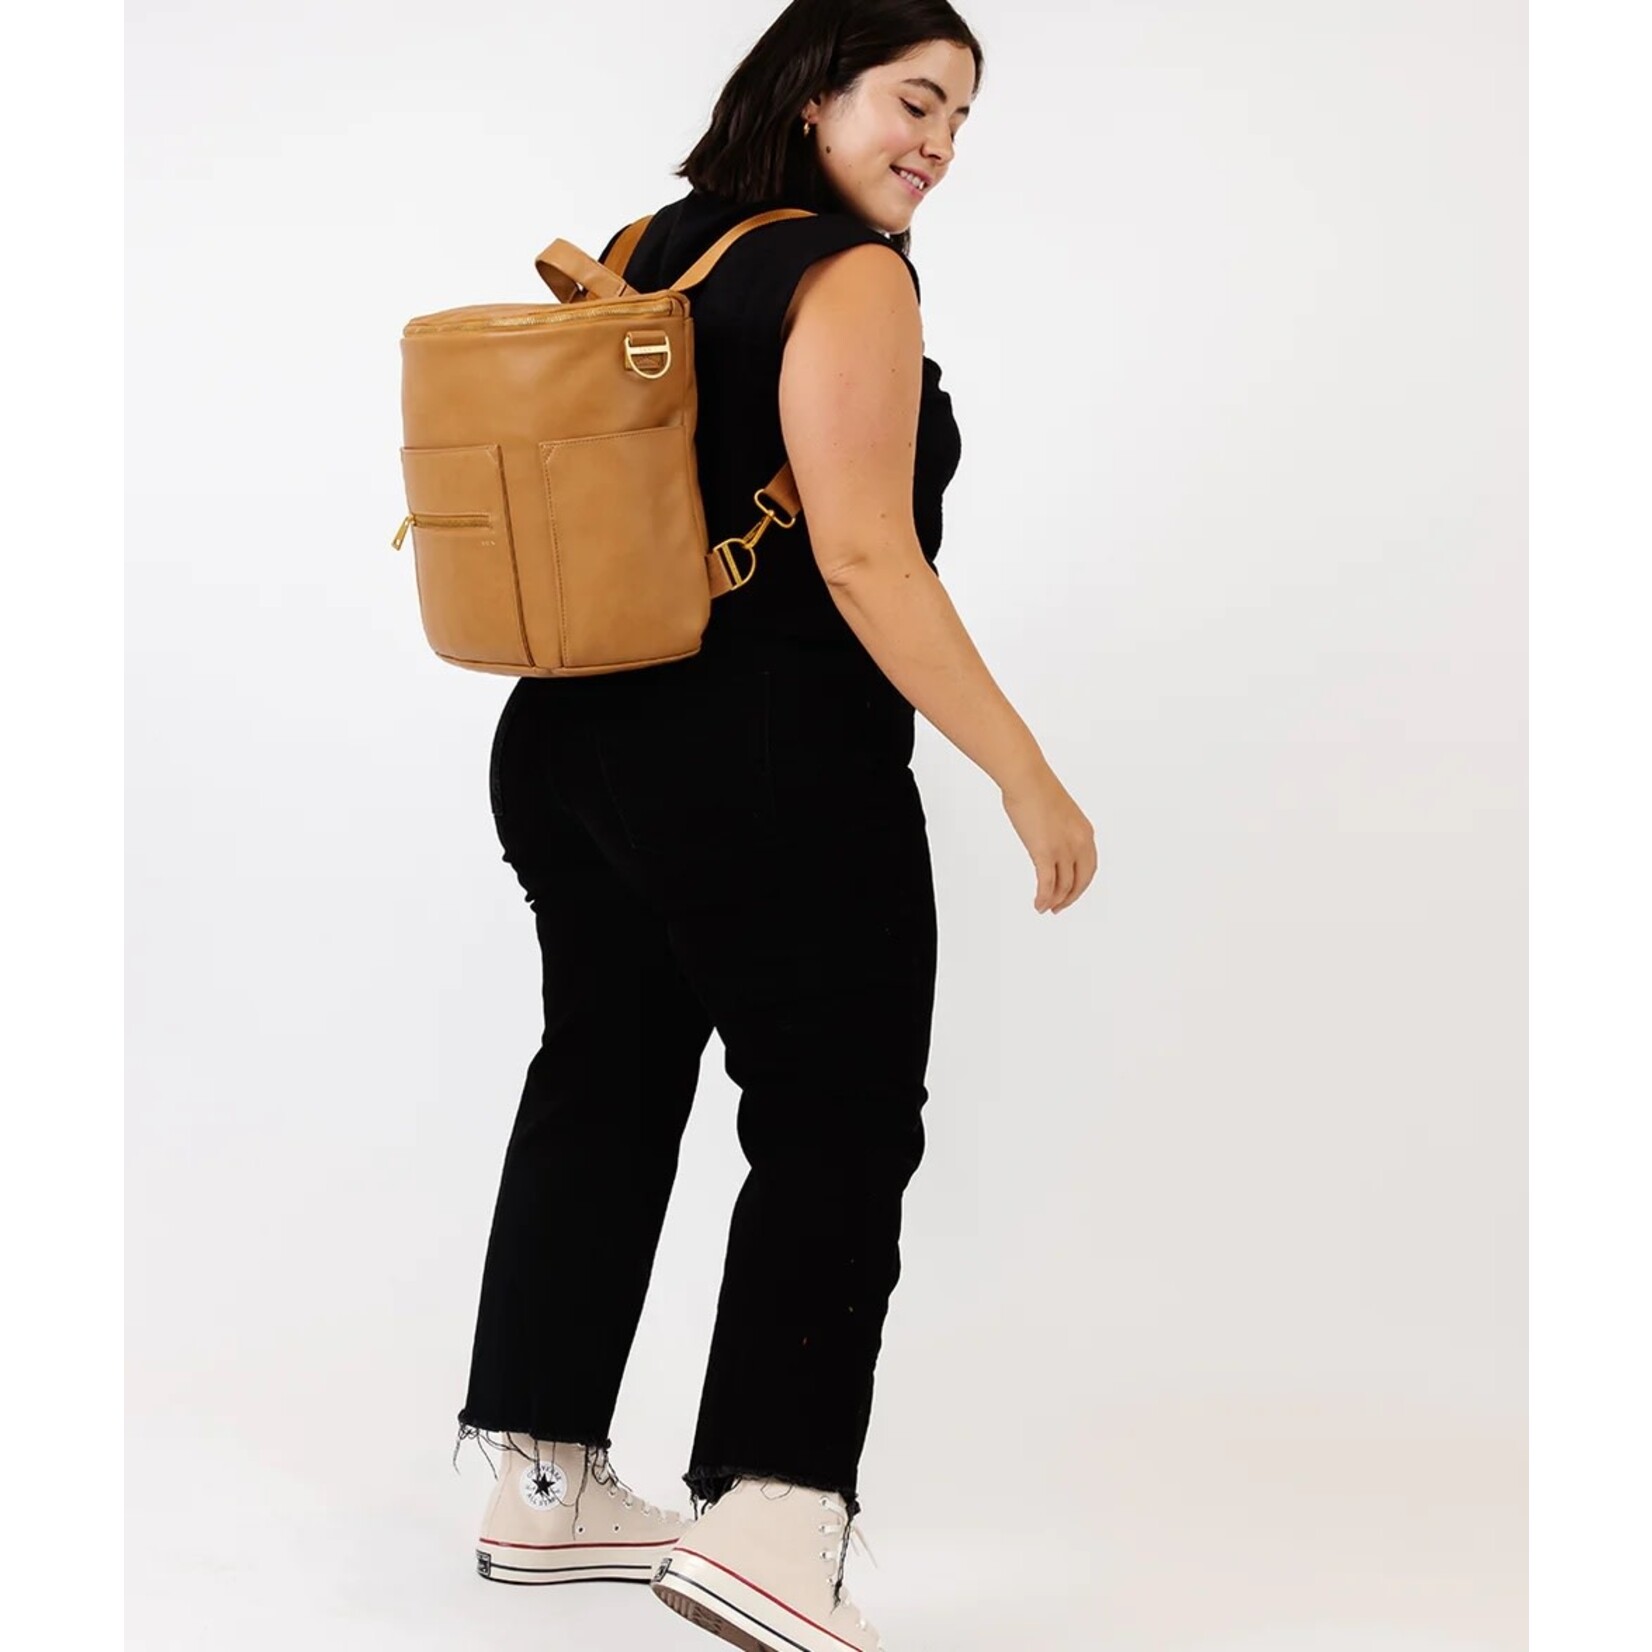 Fawn Design The Original Diaper Bag - Tan One-Size